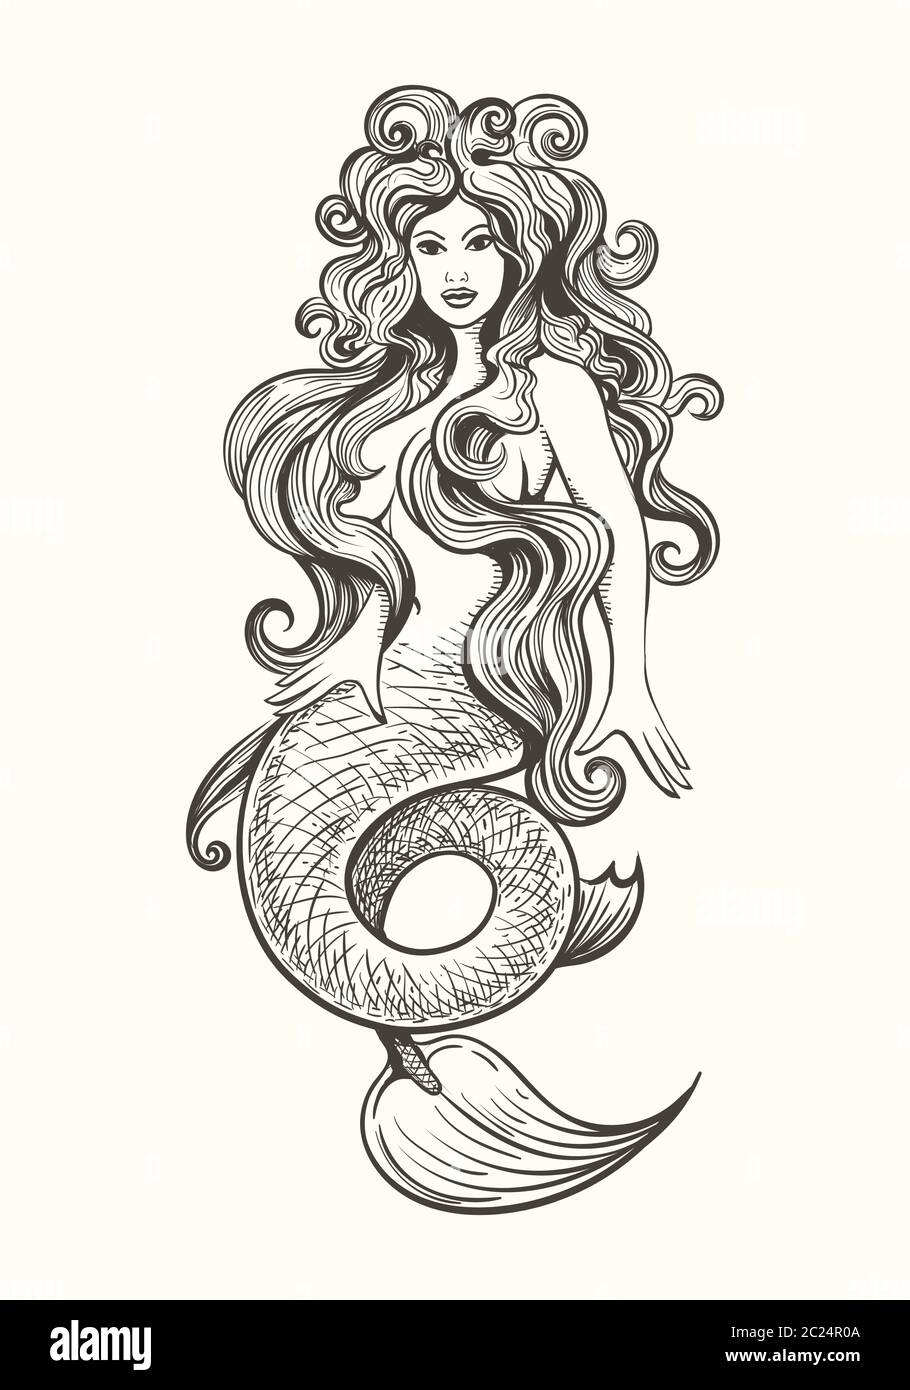 Mermaid Tattoo Sketch by TheMacRat on DeviantArt